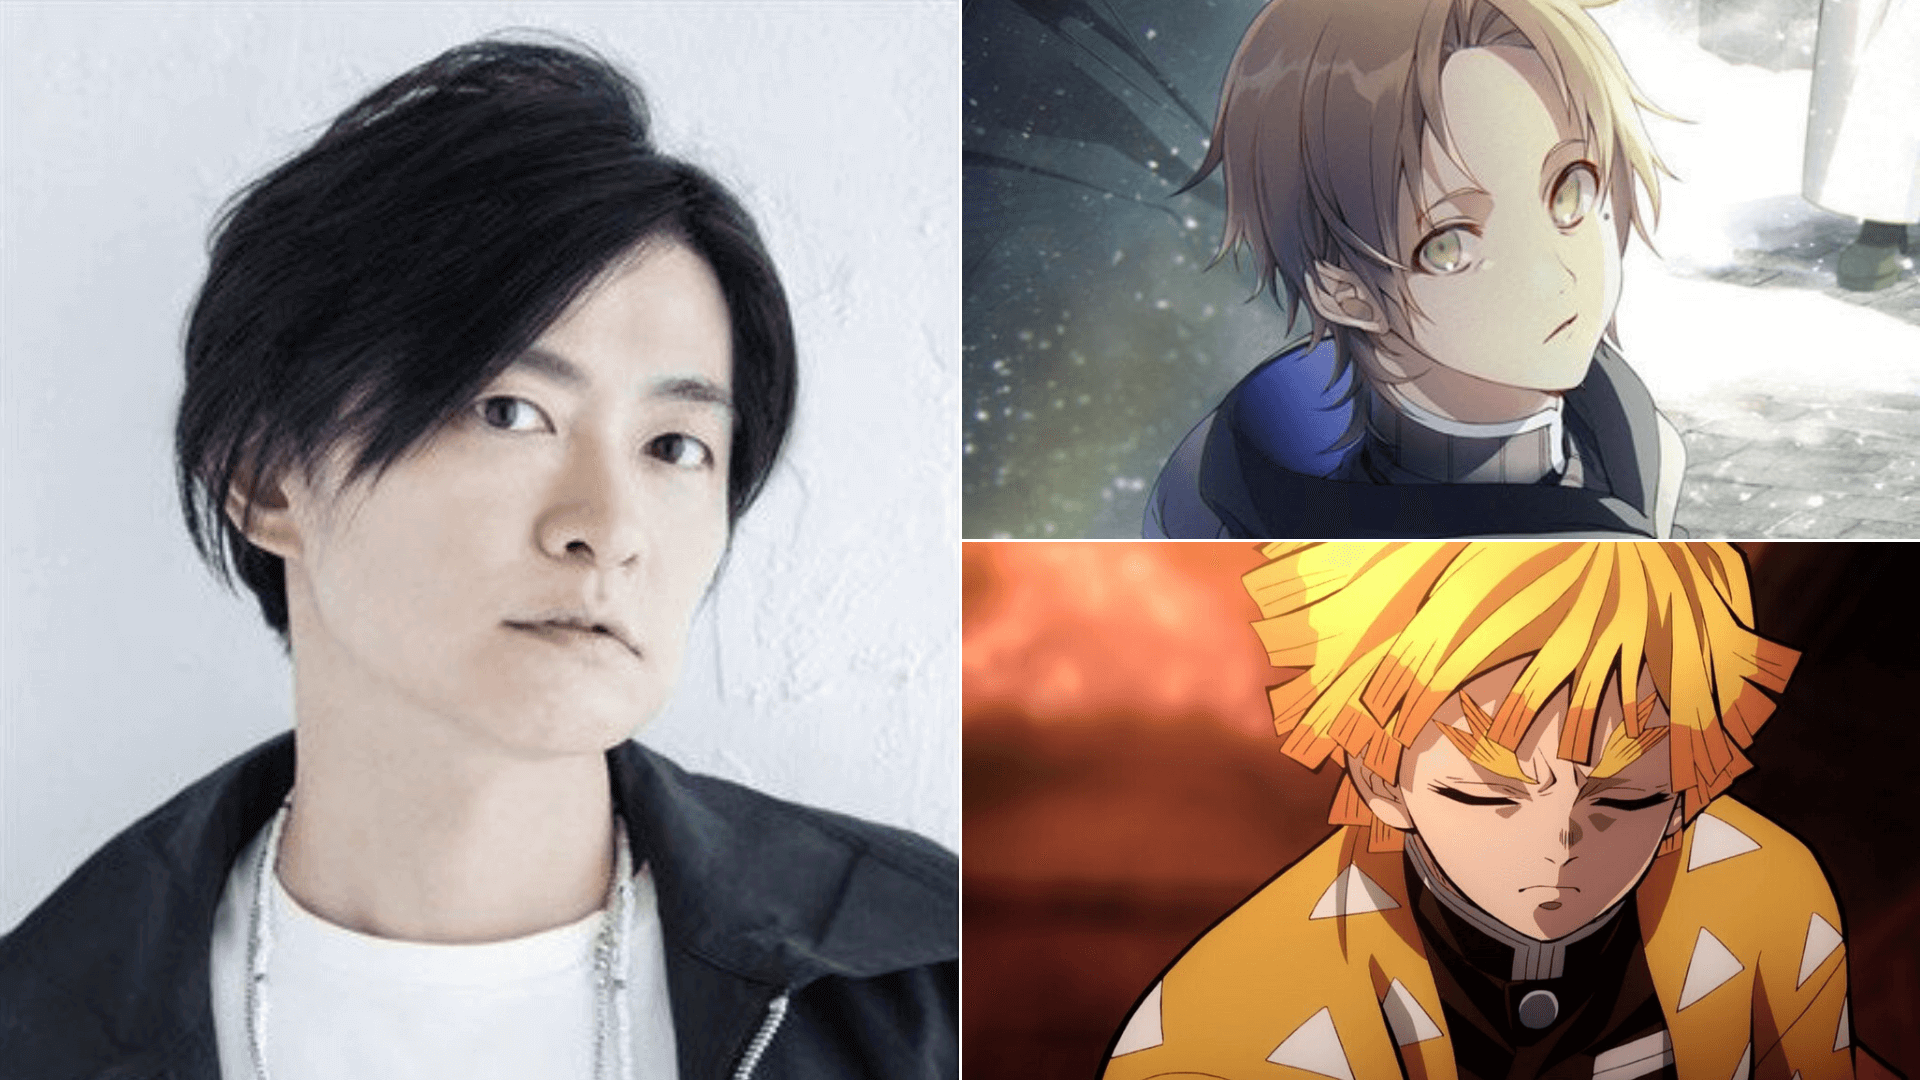 Additional Cast for Mushoku Tensei Season 2 Revealed